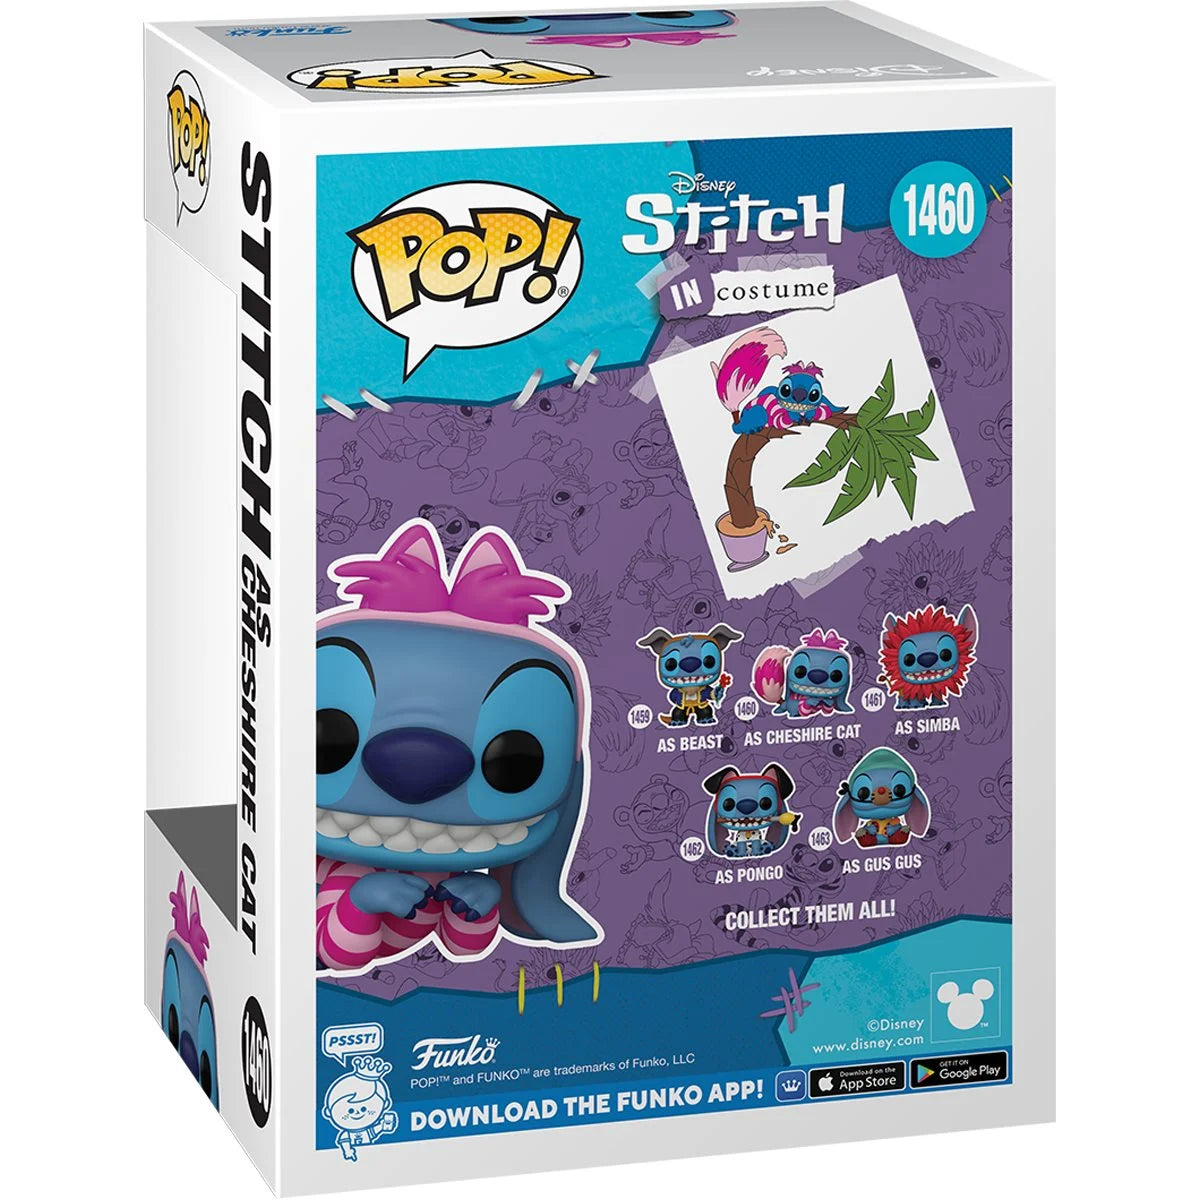 Funko Pop! Disney Lilo & Stitch Costume Stitch as Cheshire Cat Vinyl Figure #1460